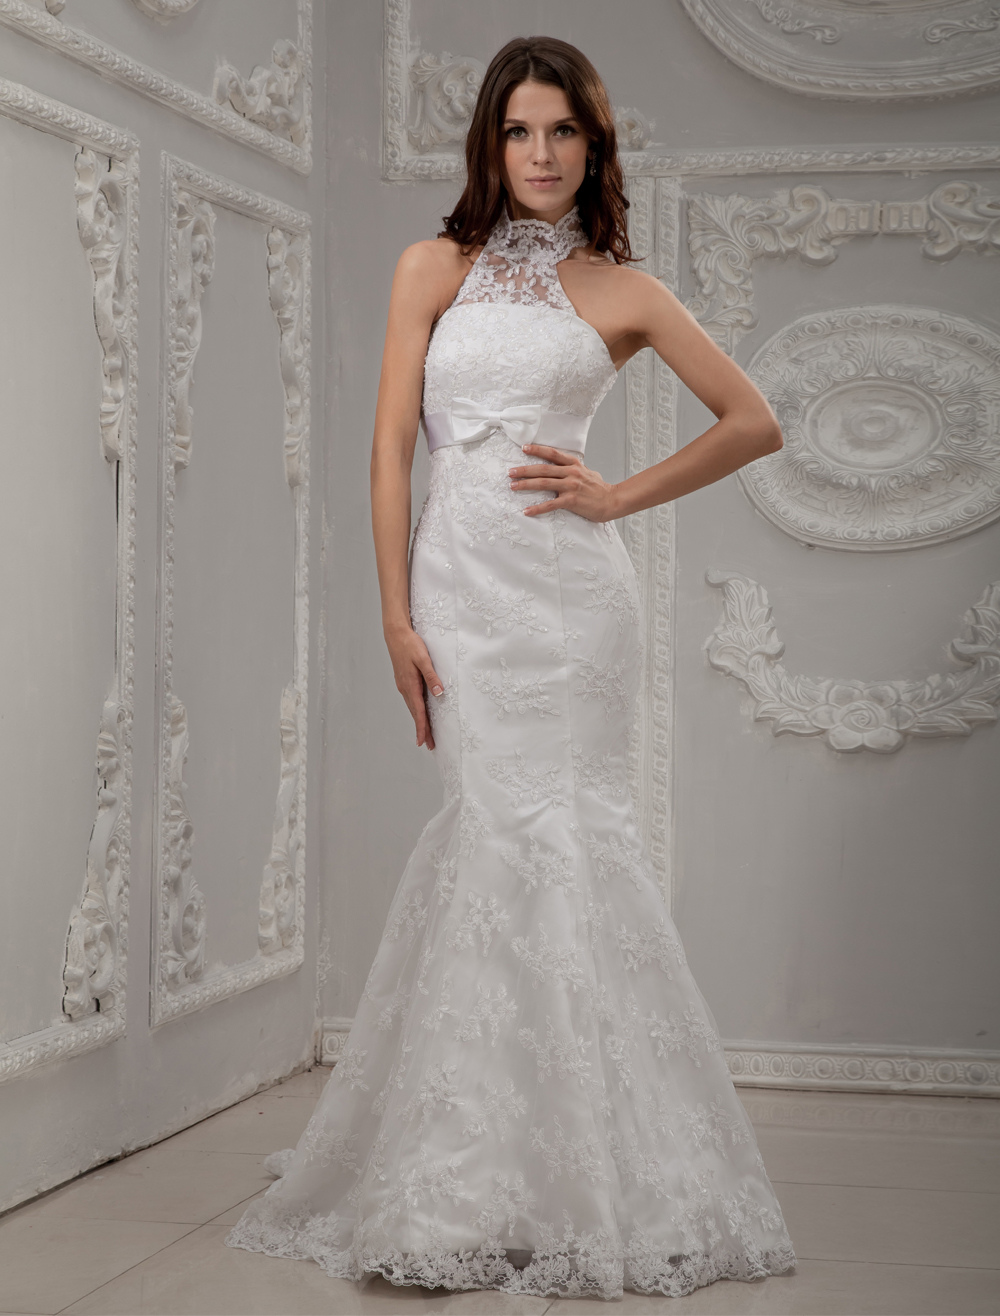 white halter neck wedding dress